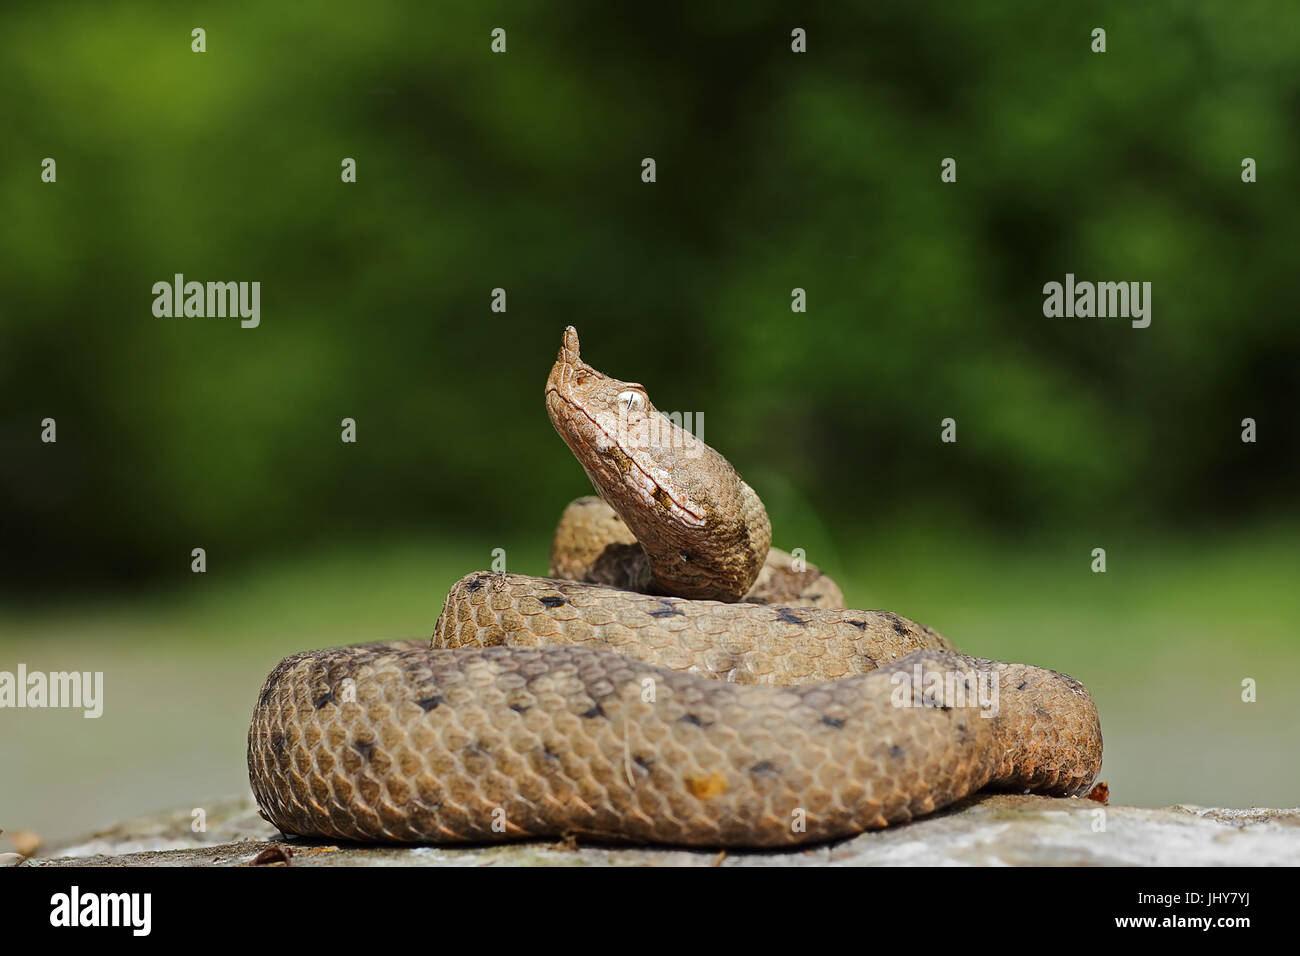 large female nose nosed viper basking on rock ( Vipera ammodytes, the most venomous european snake ) Stock Photo